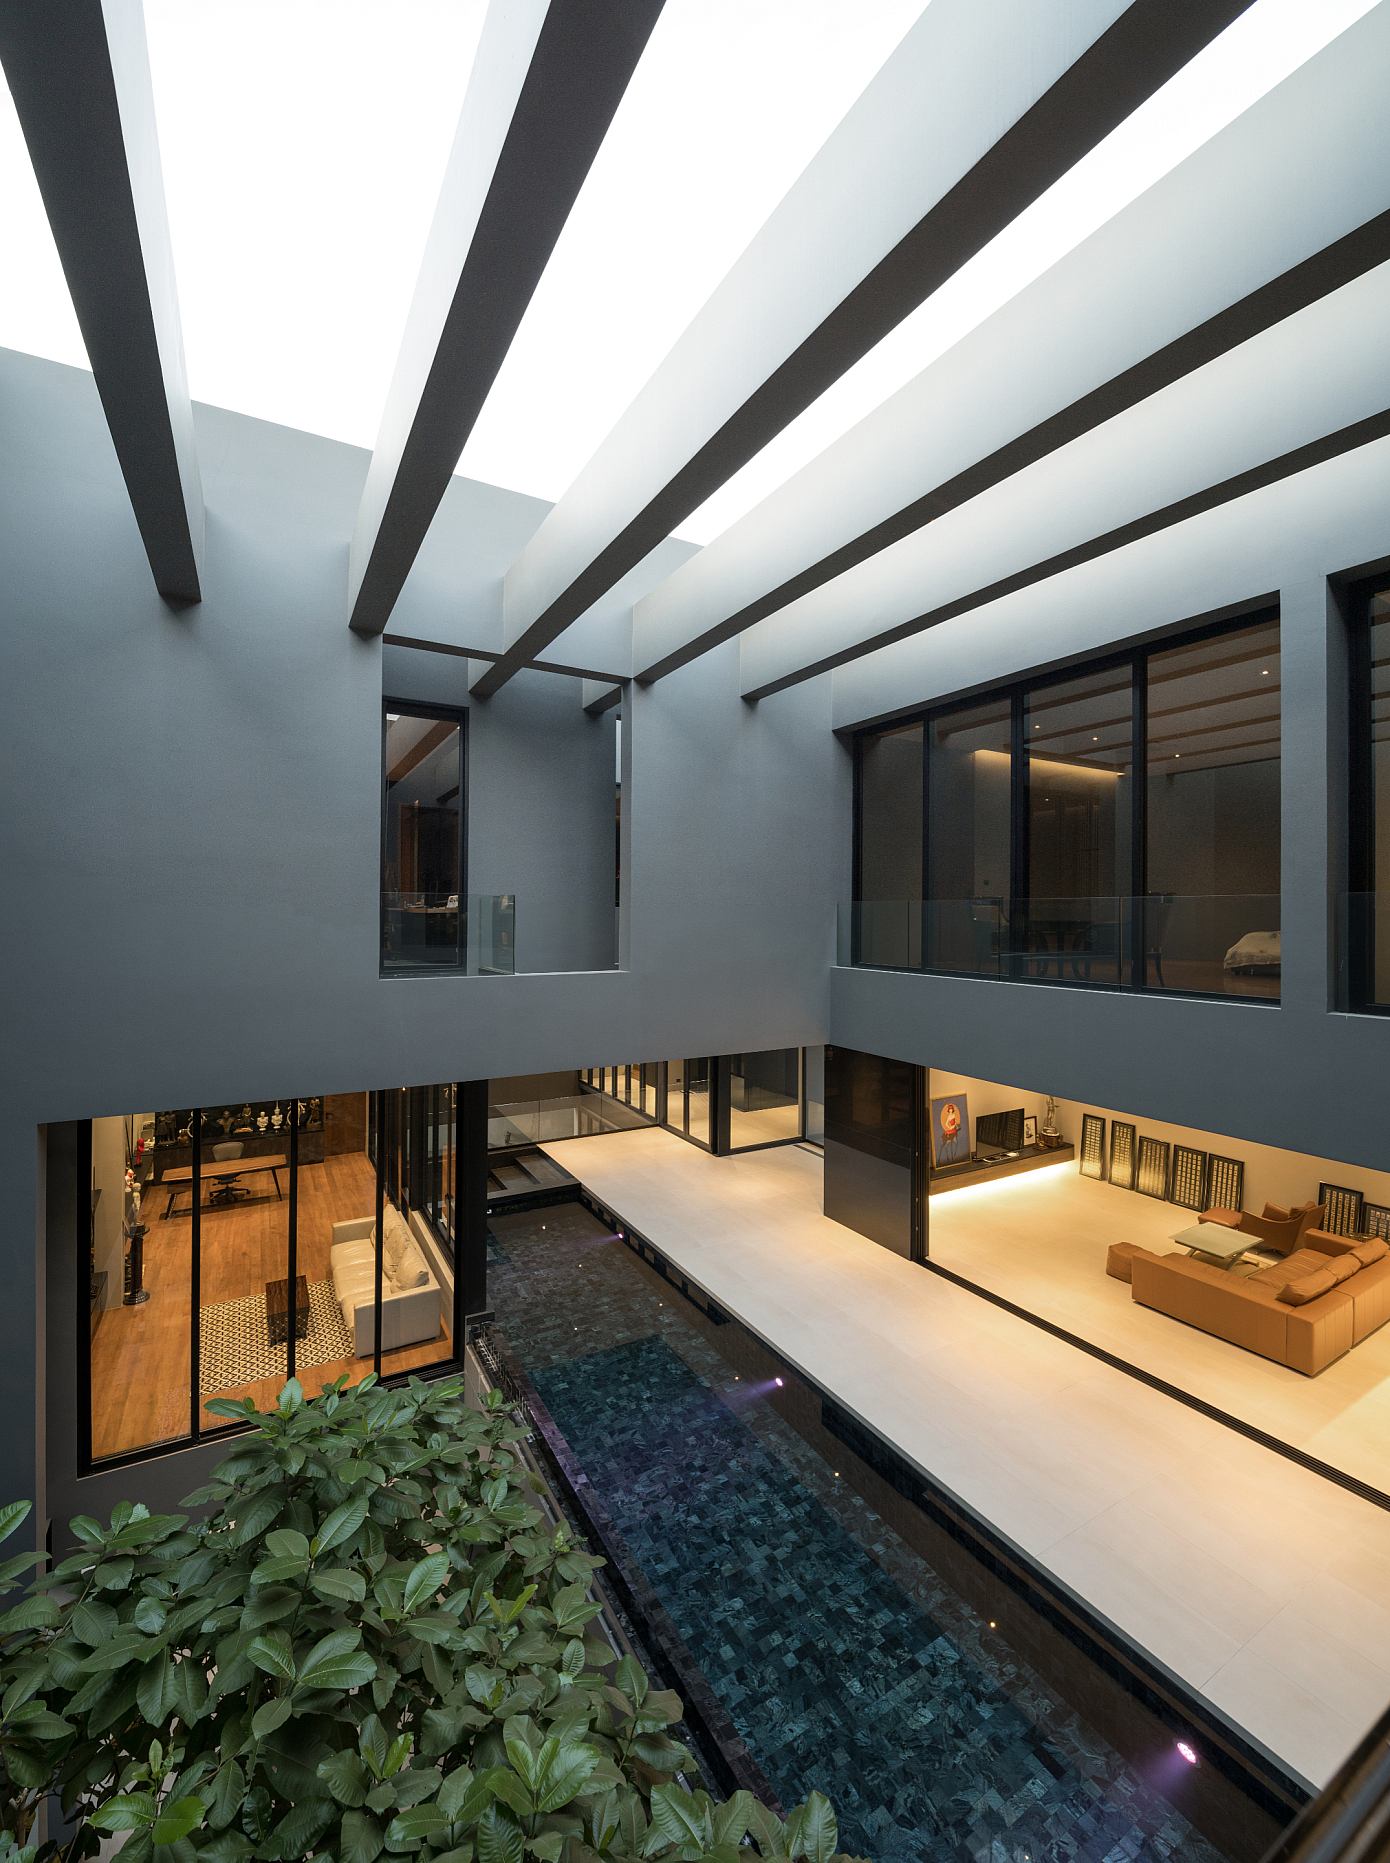 Inside-out House by Studio Krubka